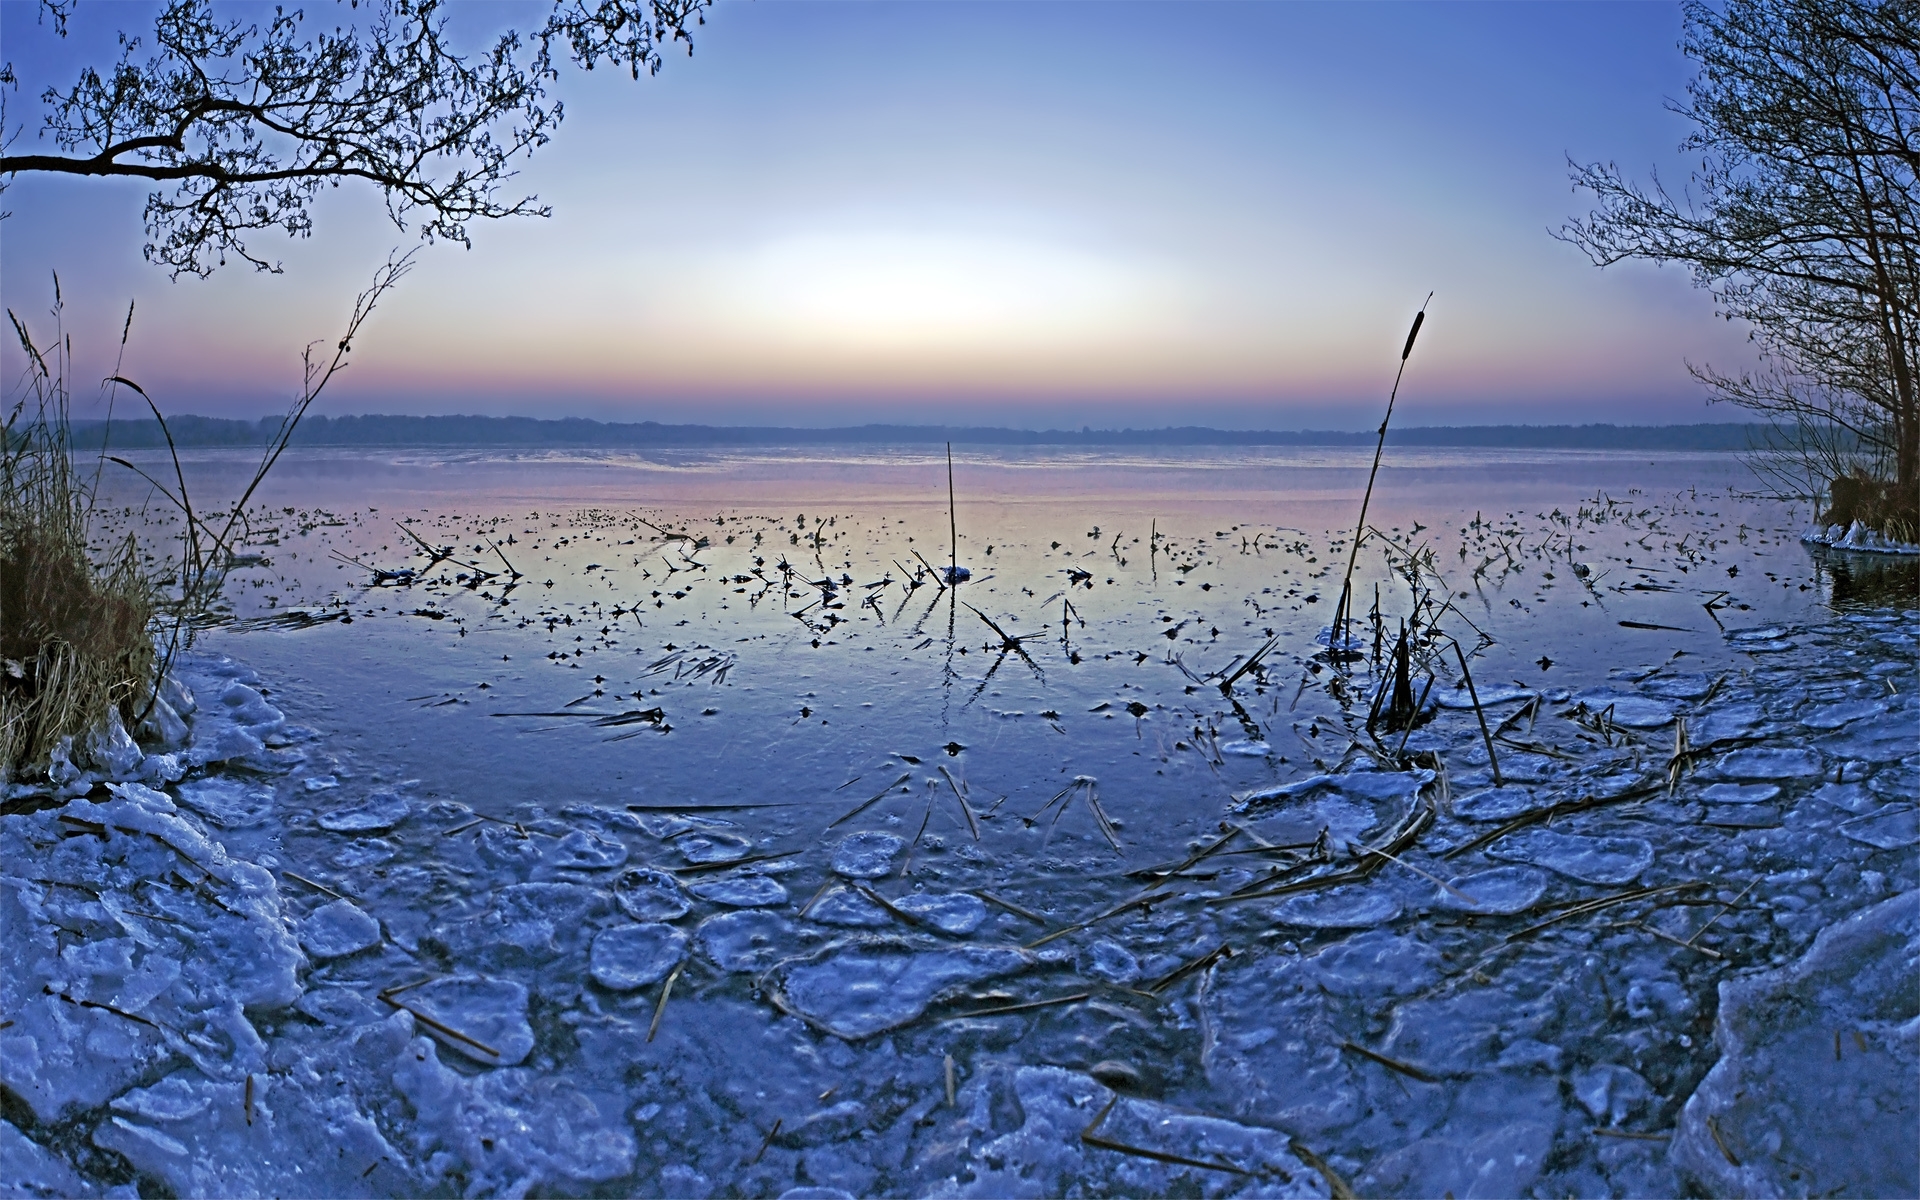 Вода в реке замерзла. Озеро Винтер. Лед на реке. Замерзшее озеро.